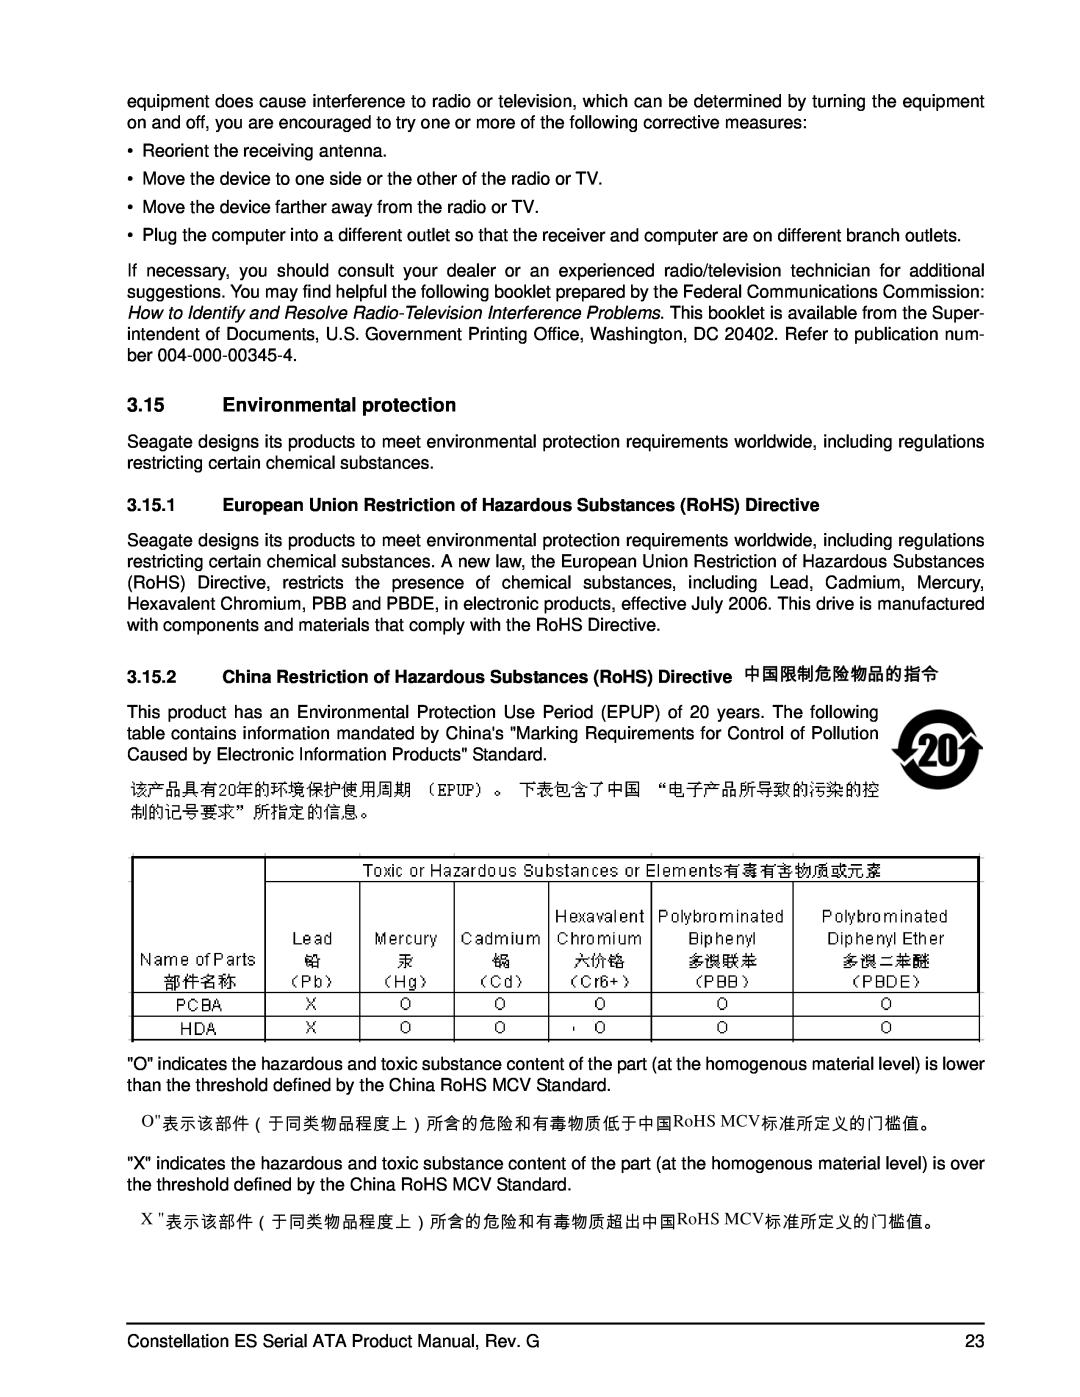 Seagate ST3500514NS, ST31000524NS, ST32000644NS Environmental protection, O表示该部件（于同类物品程度上）所含的危险和有毒物质低于中国RoHS MCV标准所定义的门槛值。 